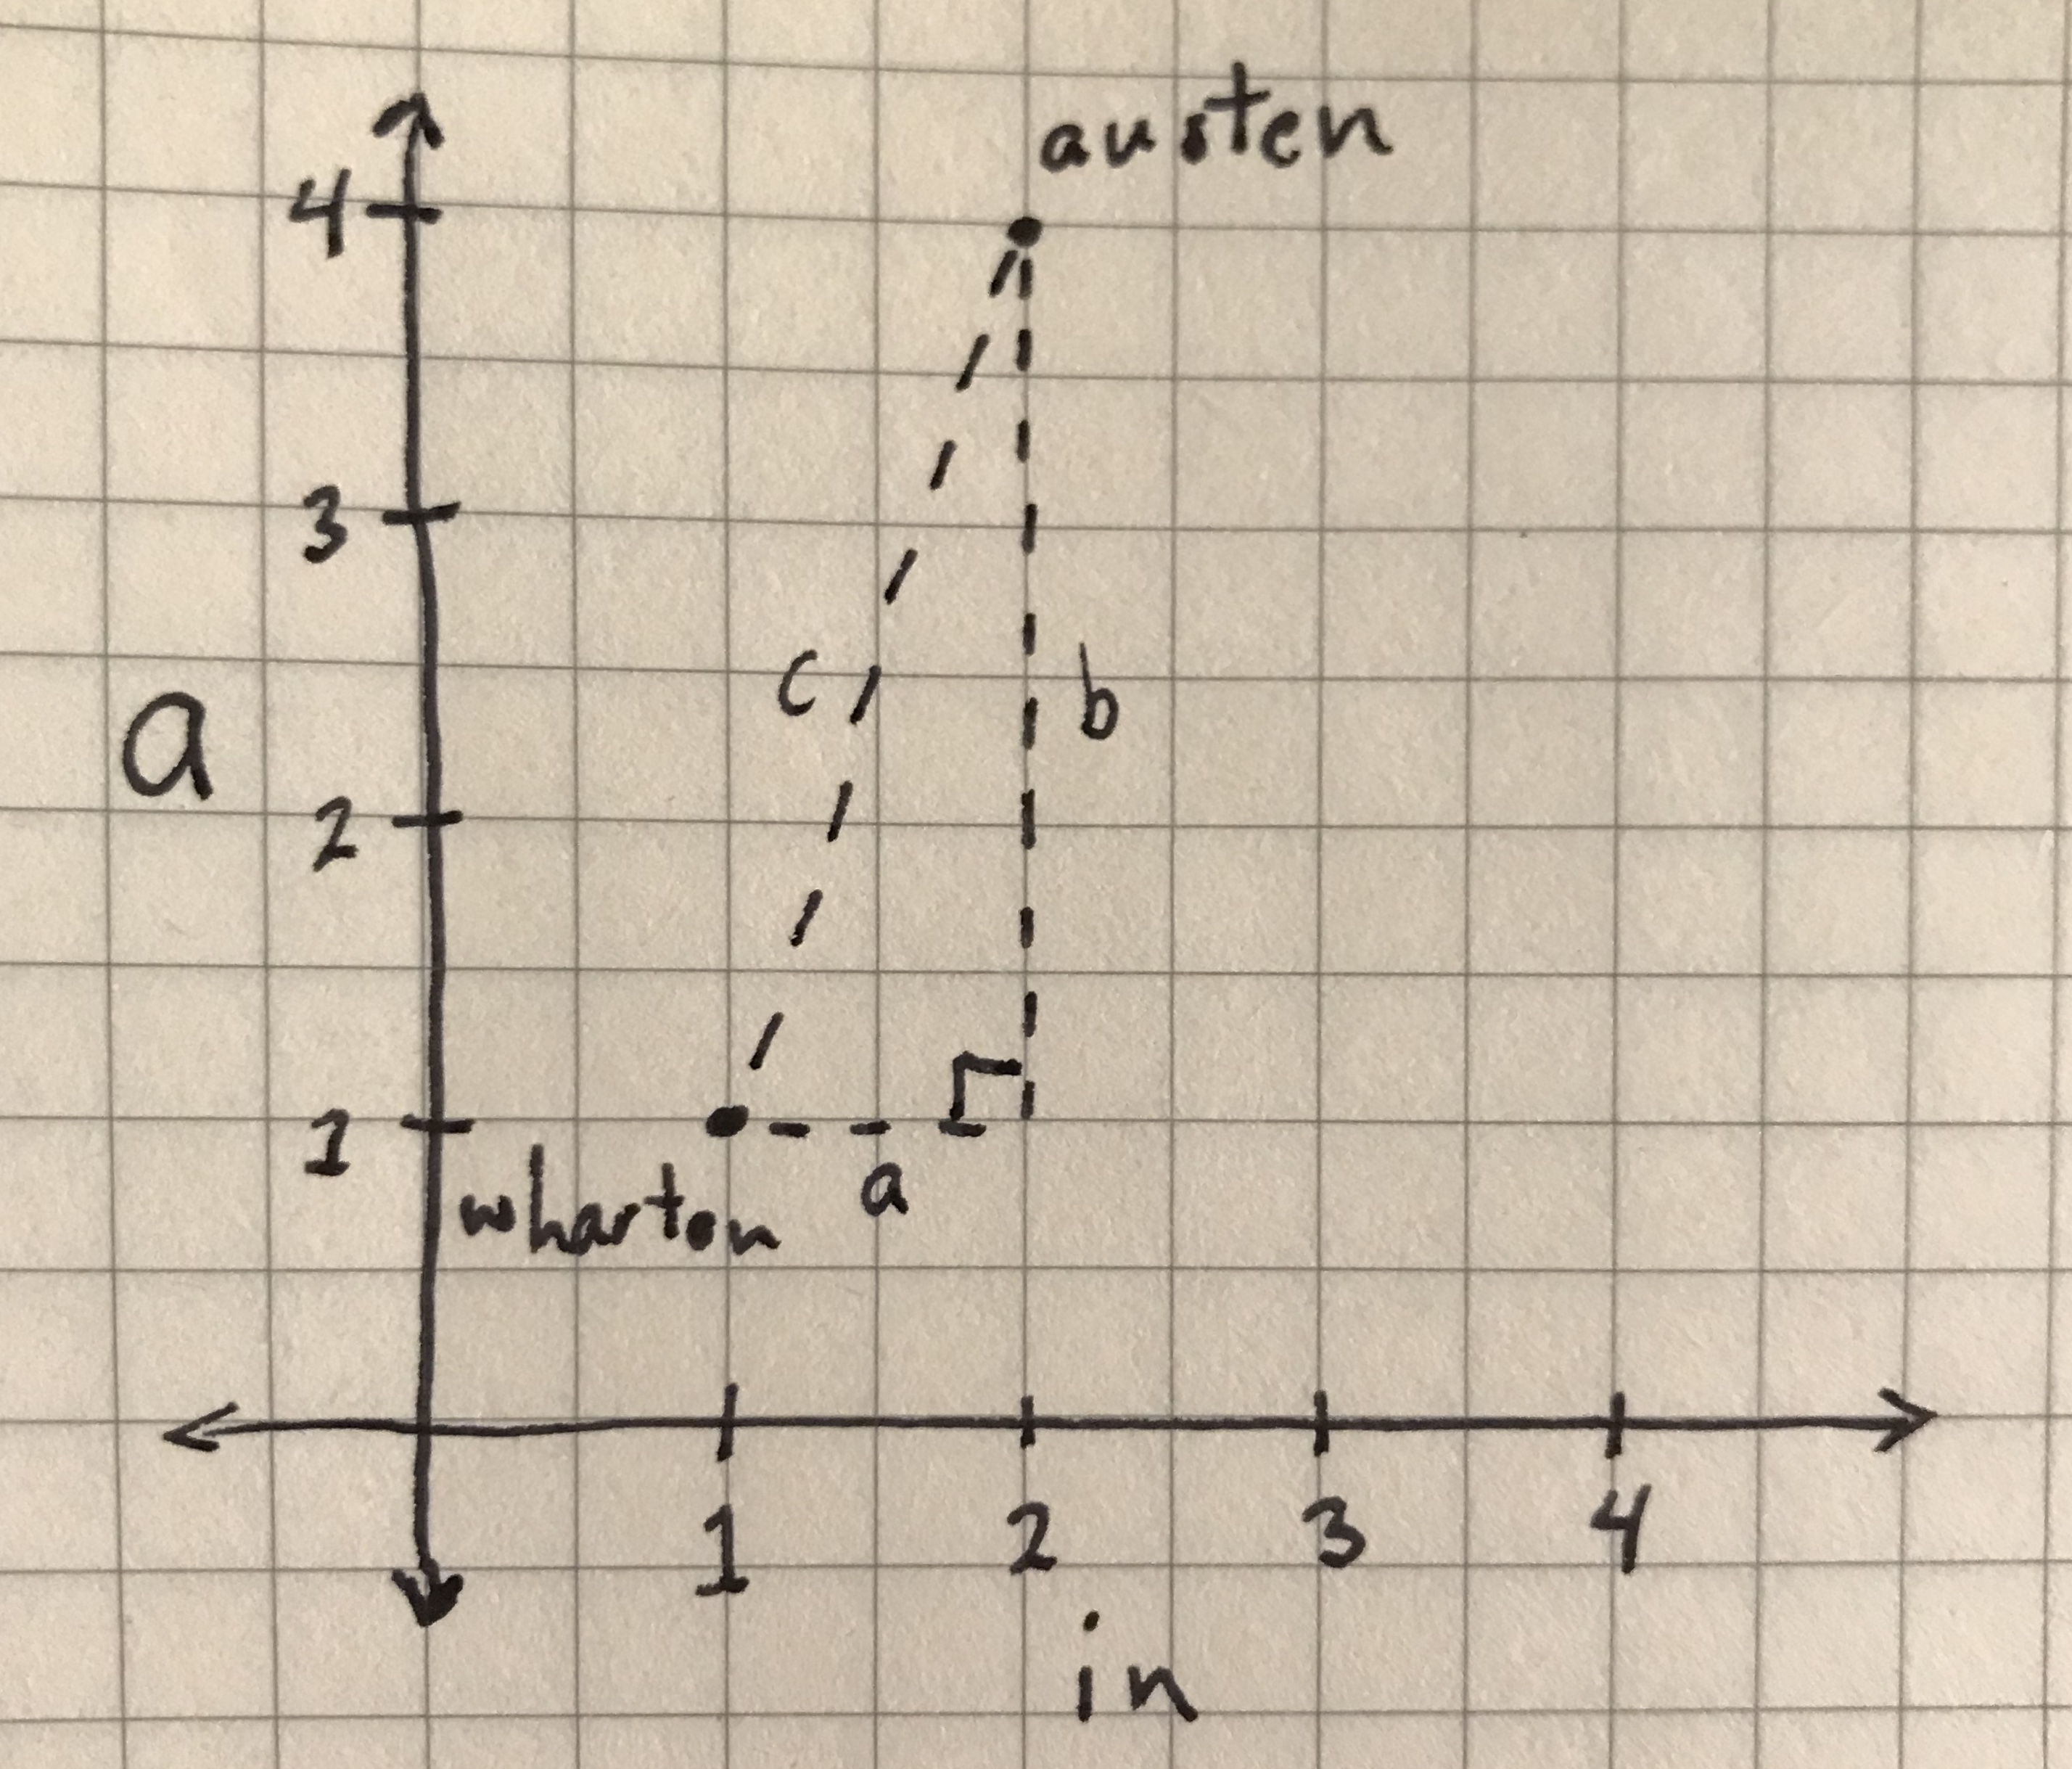 The distance between 'austen' and 'wharton' data points using Euclidean distance.